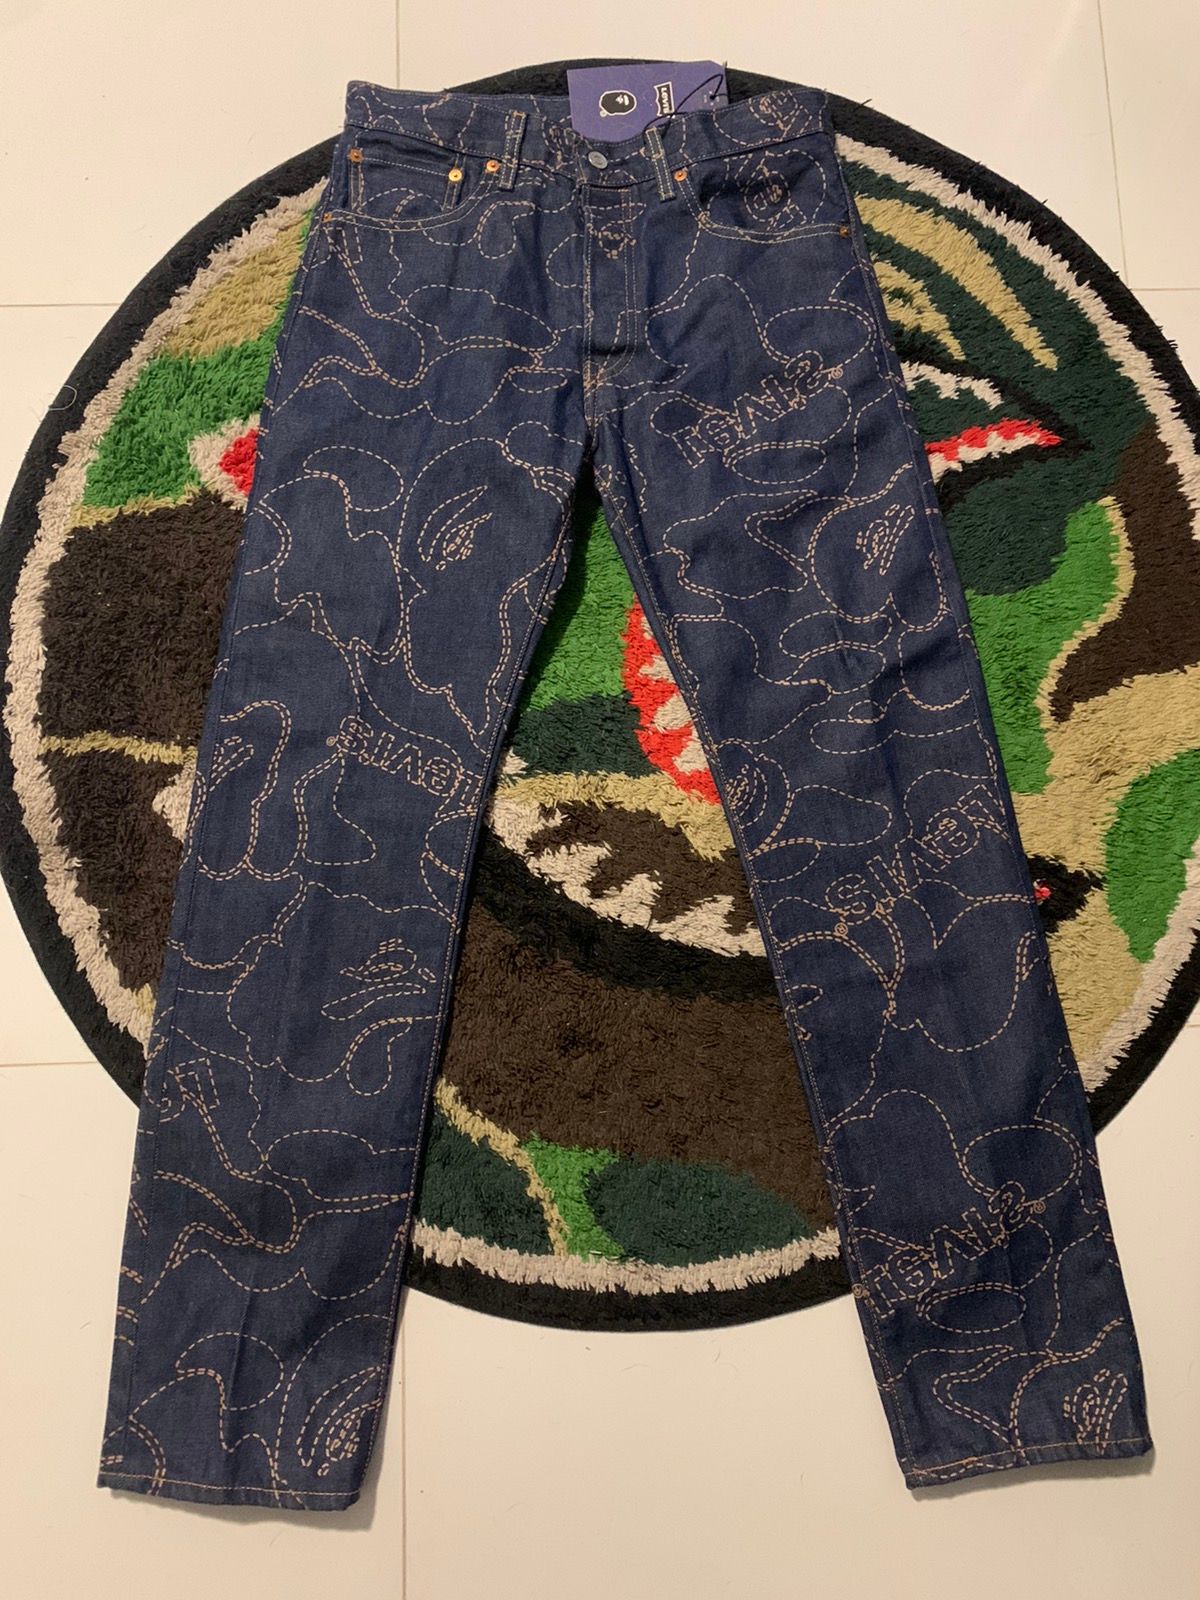 Bape Bathing Ape Levi's 501 '93 straight fit denim jeans | Grailed